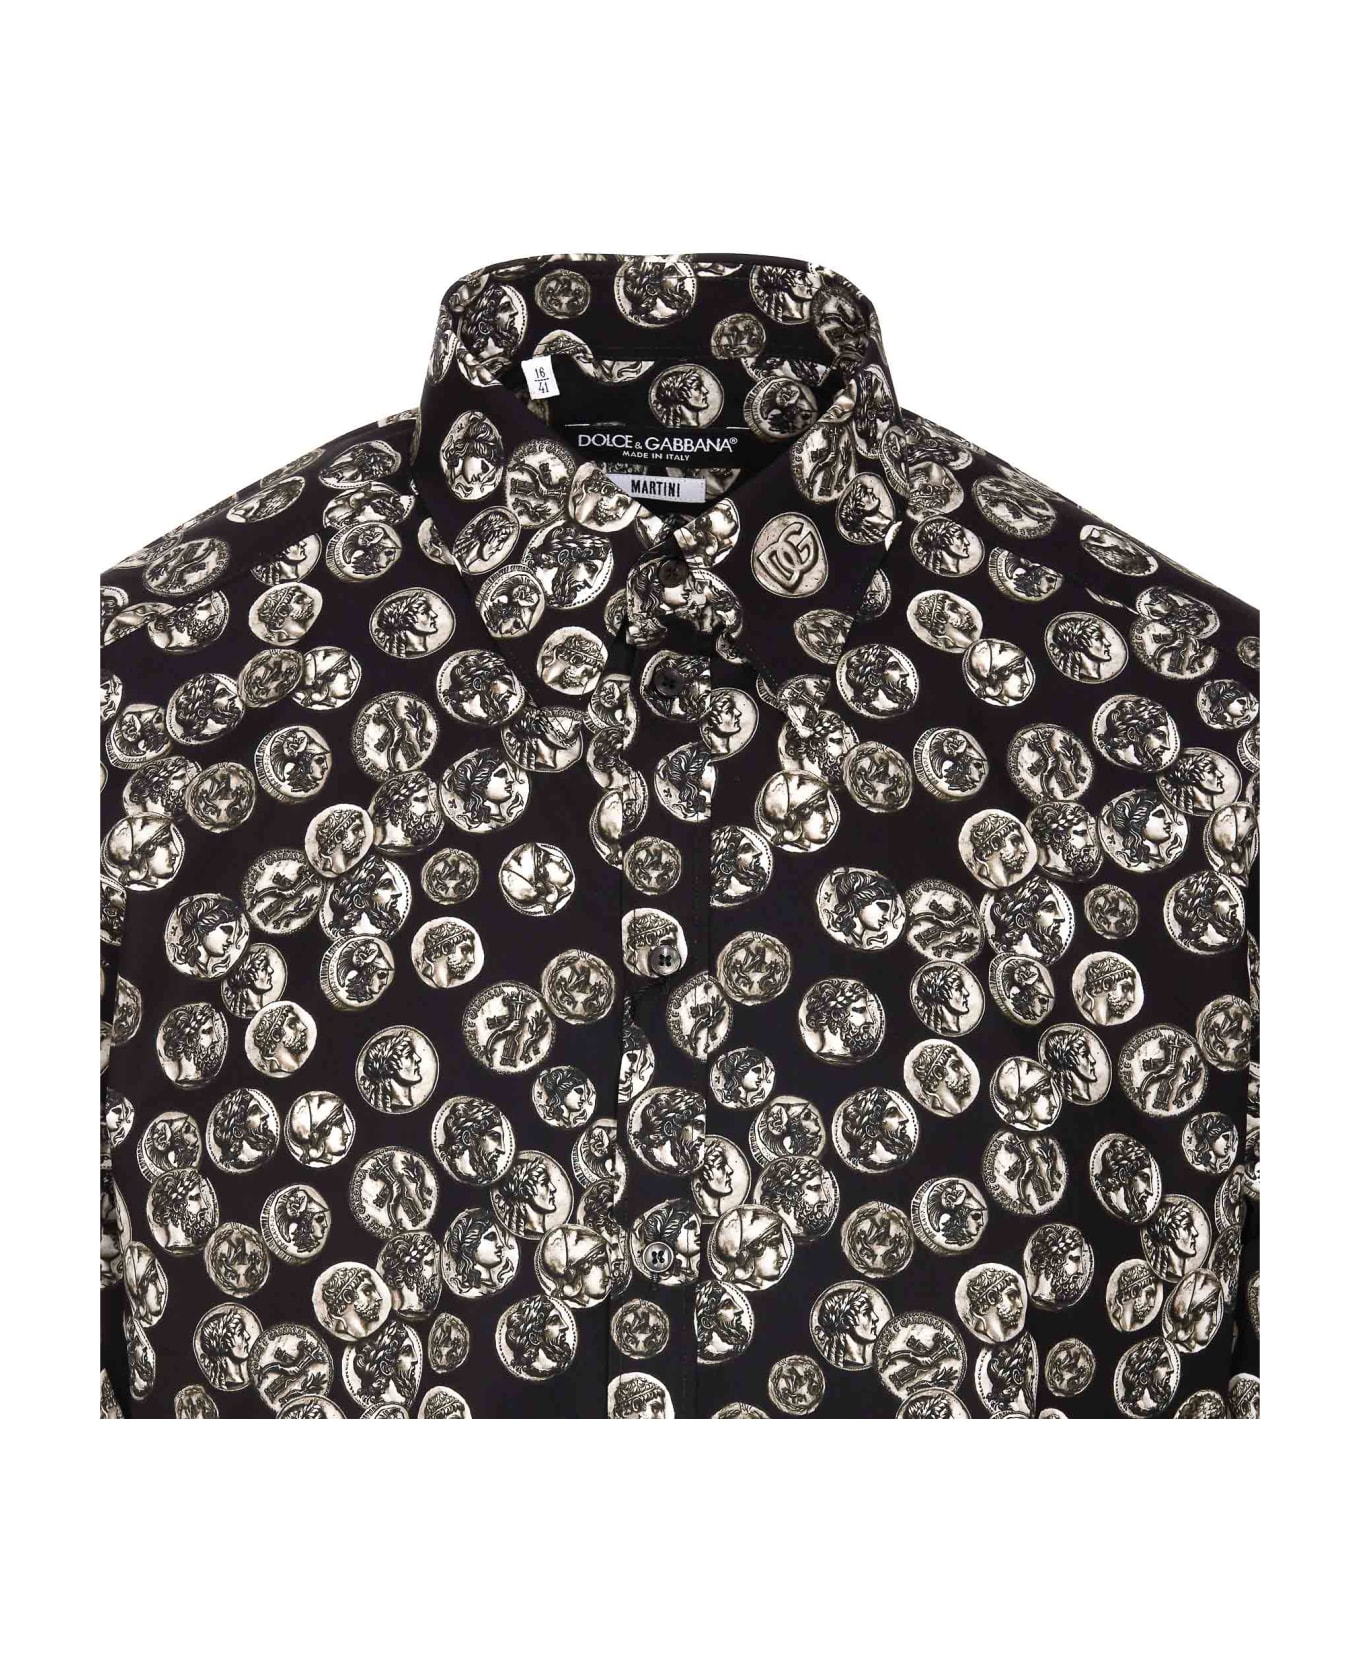 Dolce & Gabbana Coint Print Martini Shirt - Black